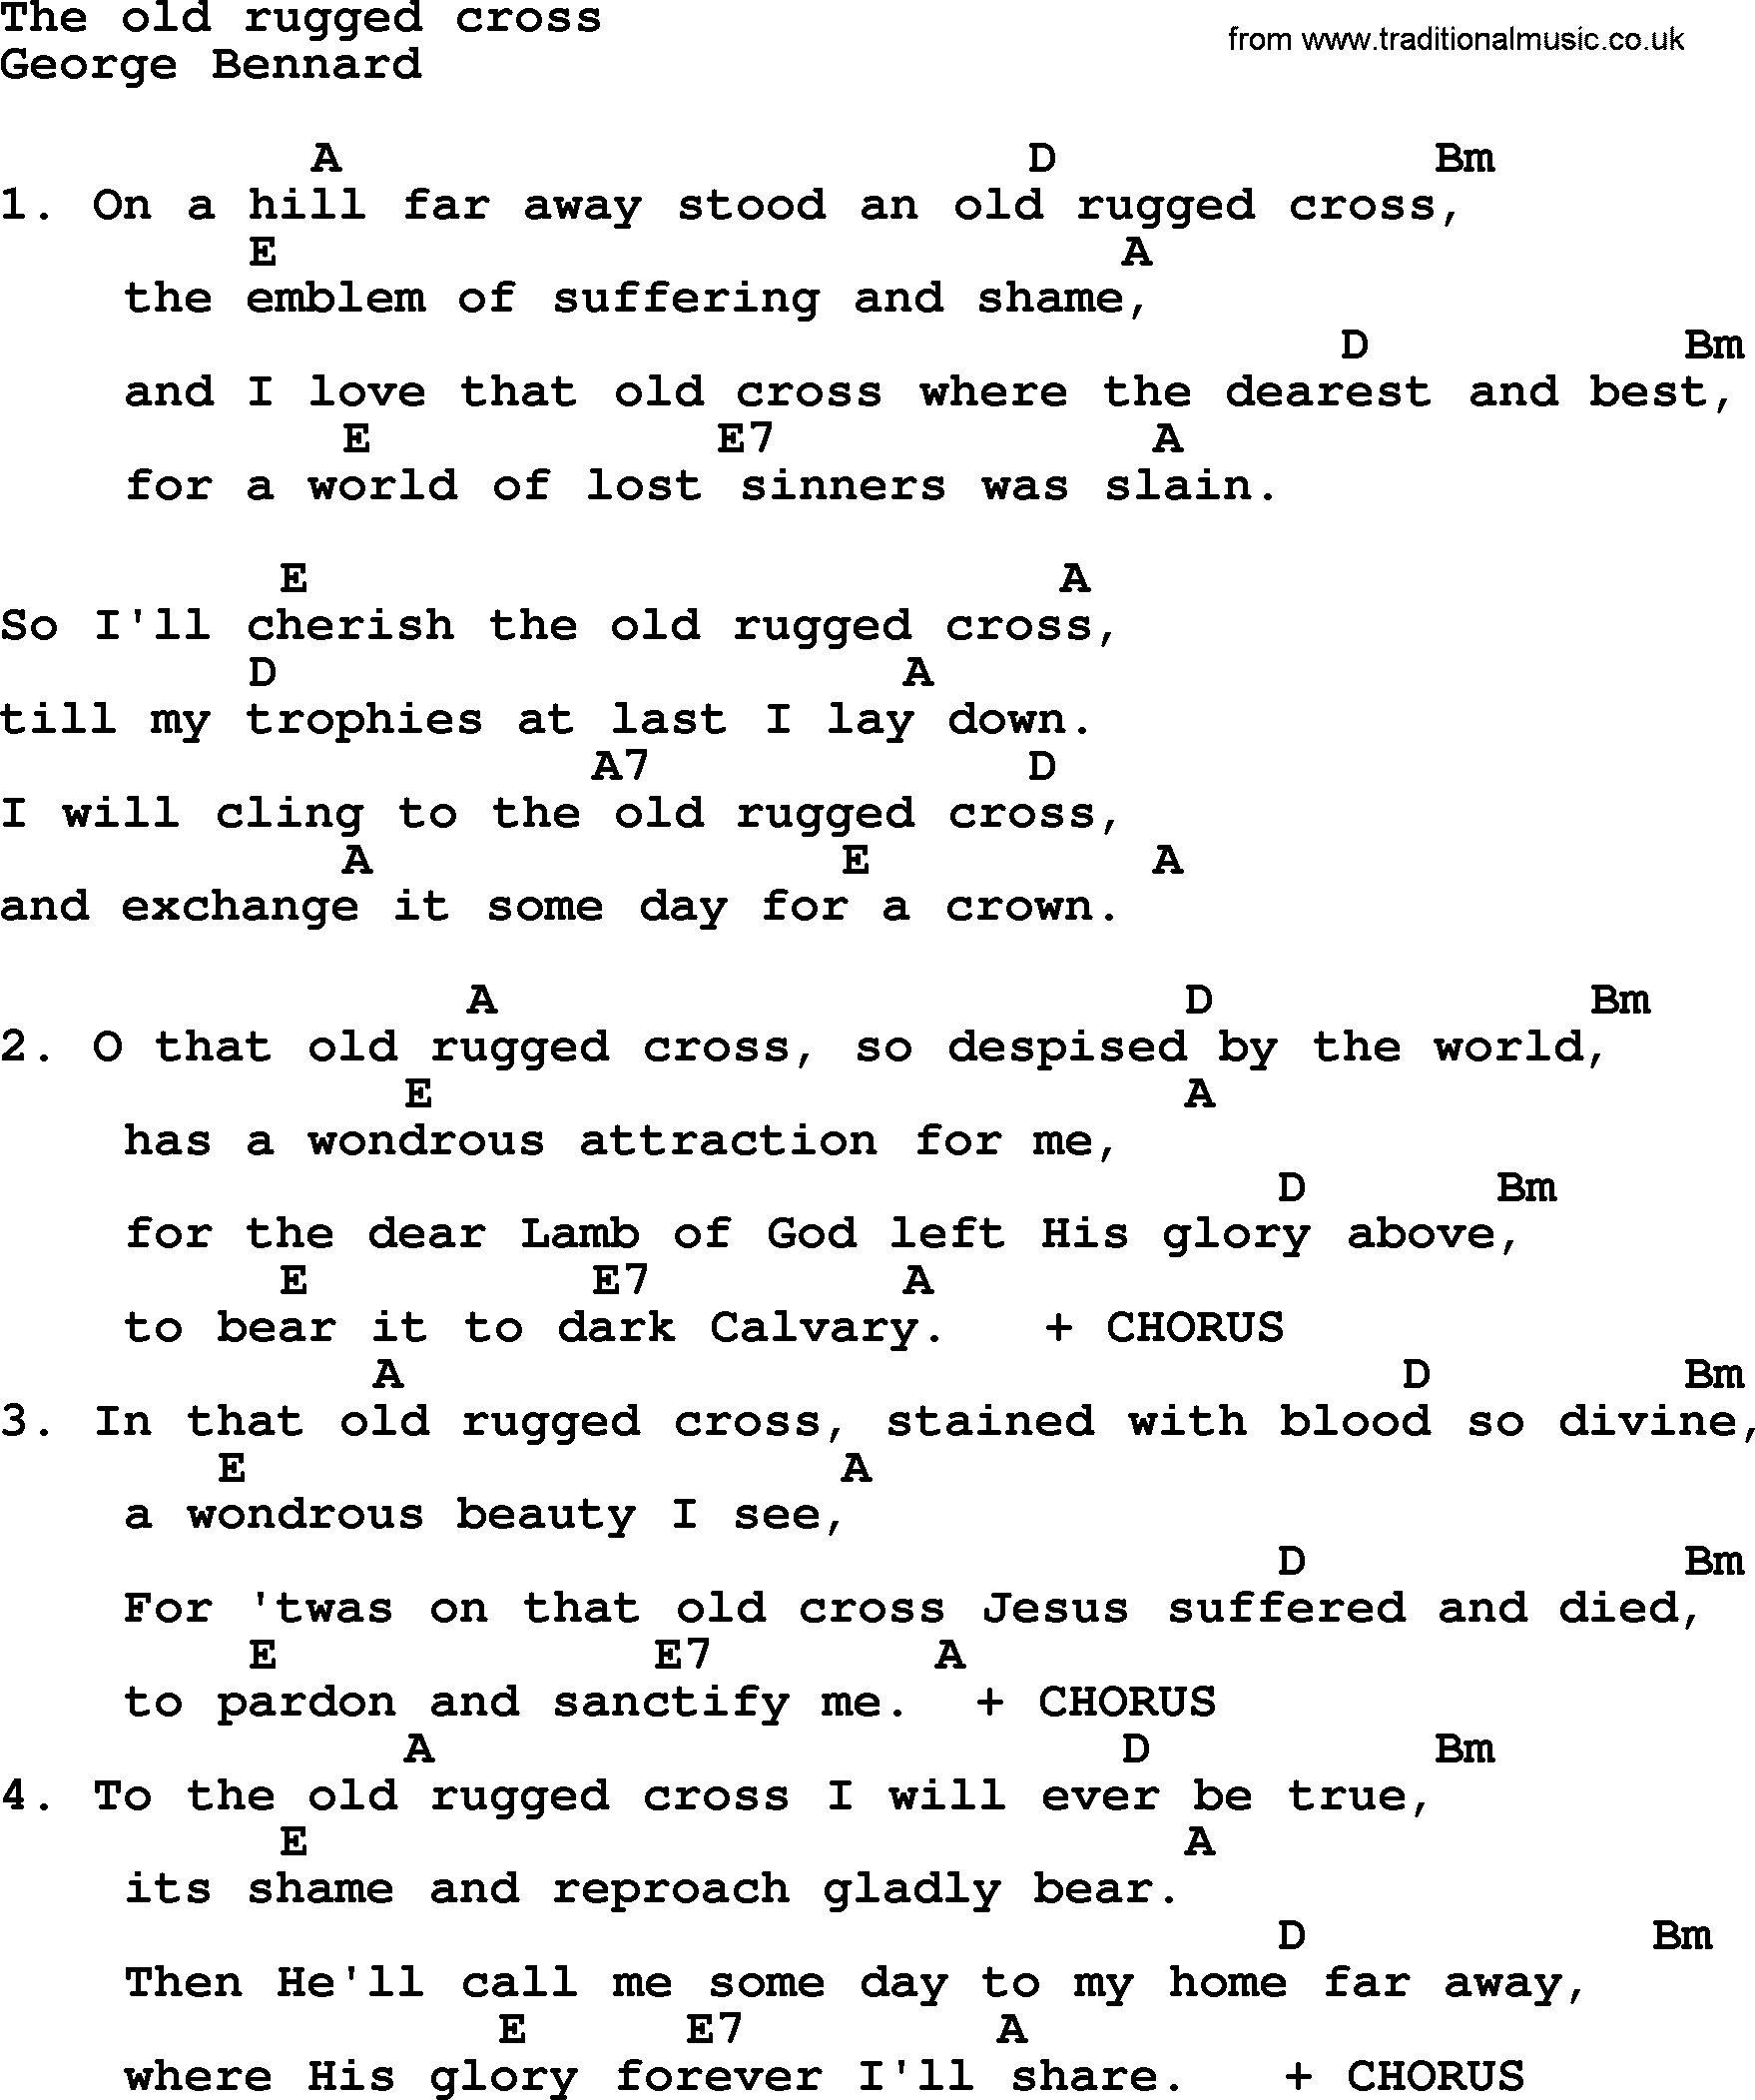 Loretta Lynn song: The Old Rugged Cross lyrics and chords